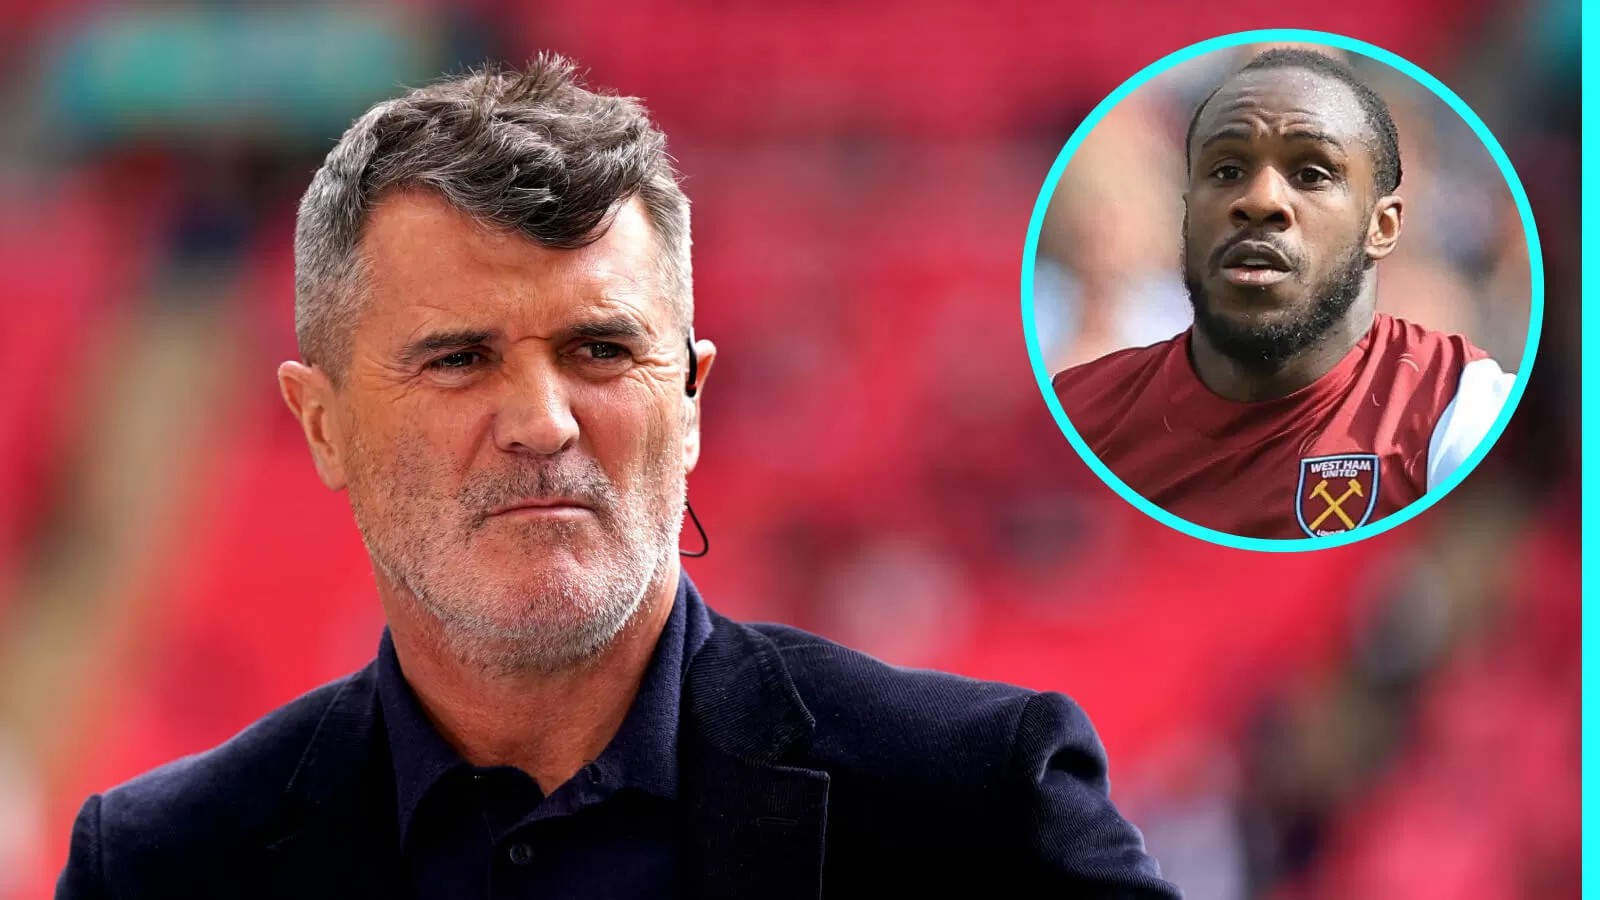 West Ham star Antonio slams Man Utd legend Keane over ‘dinosaur mentality’ in unlikely squabble